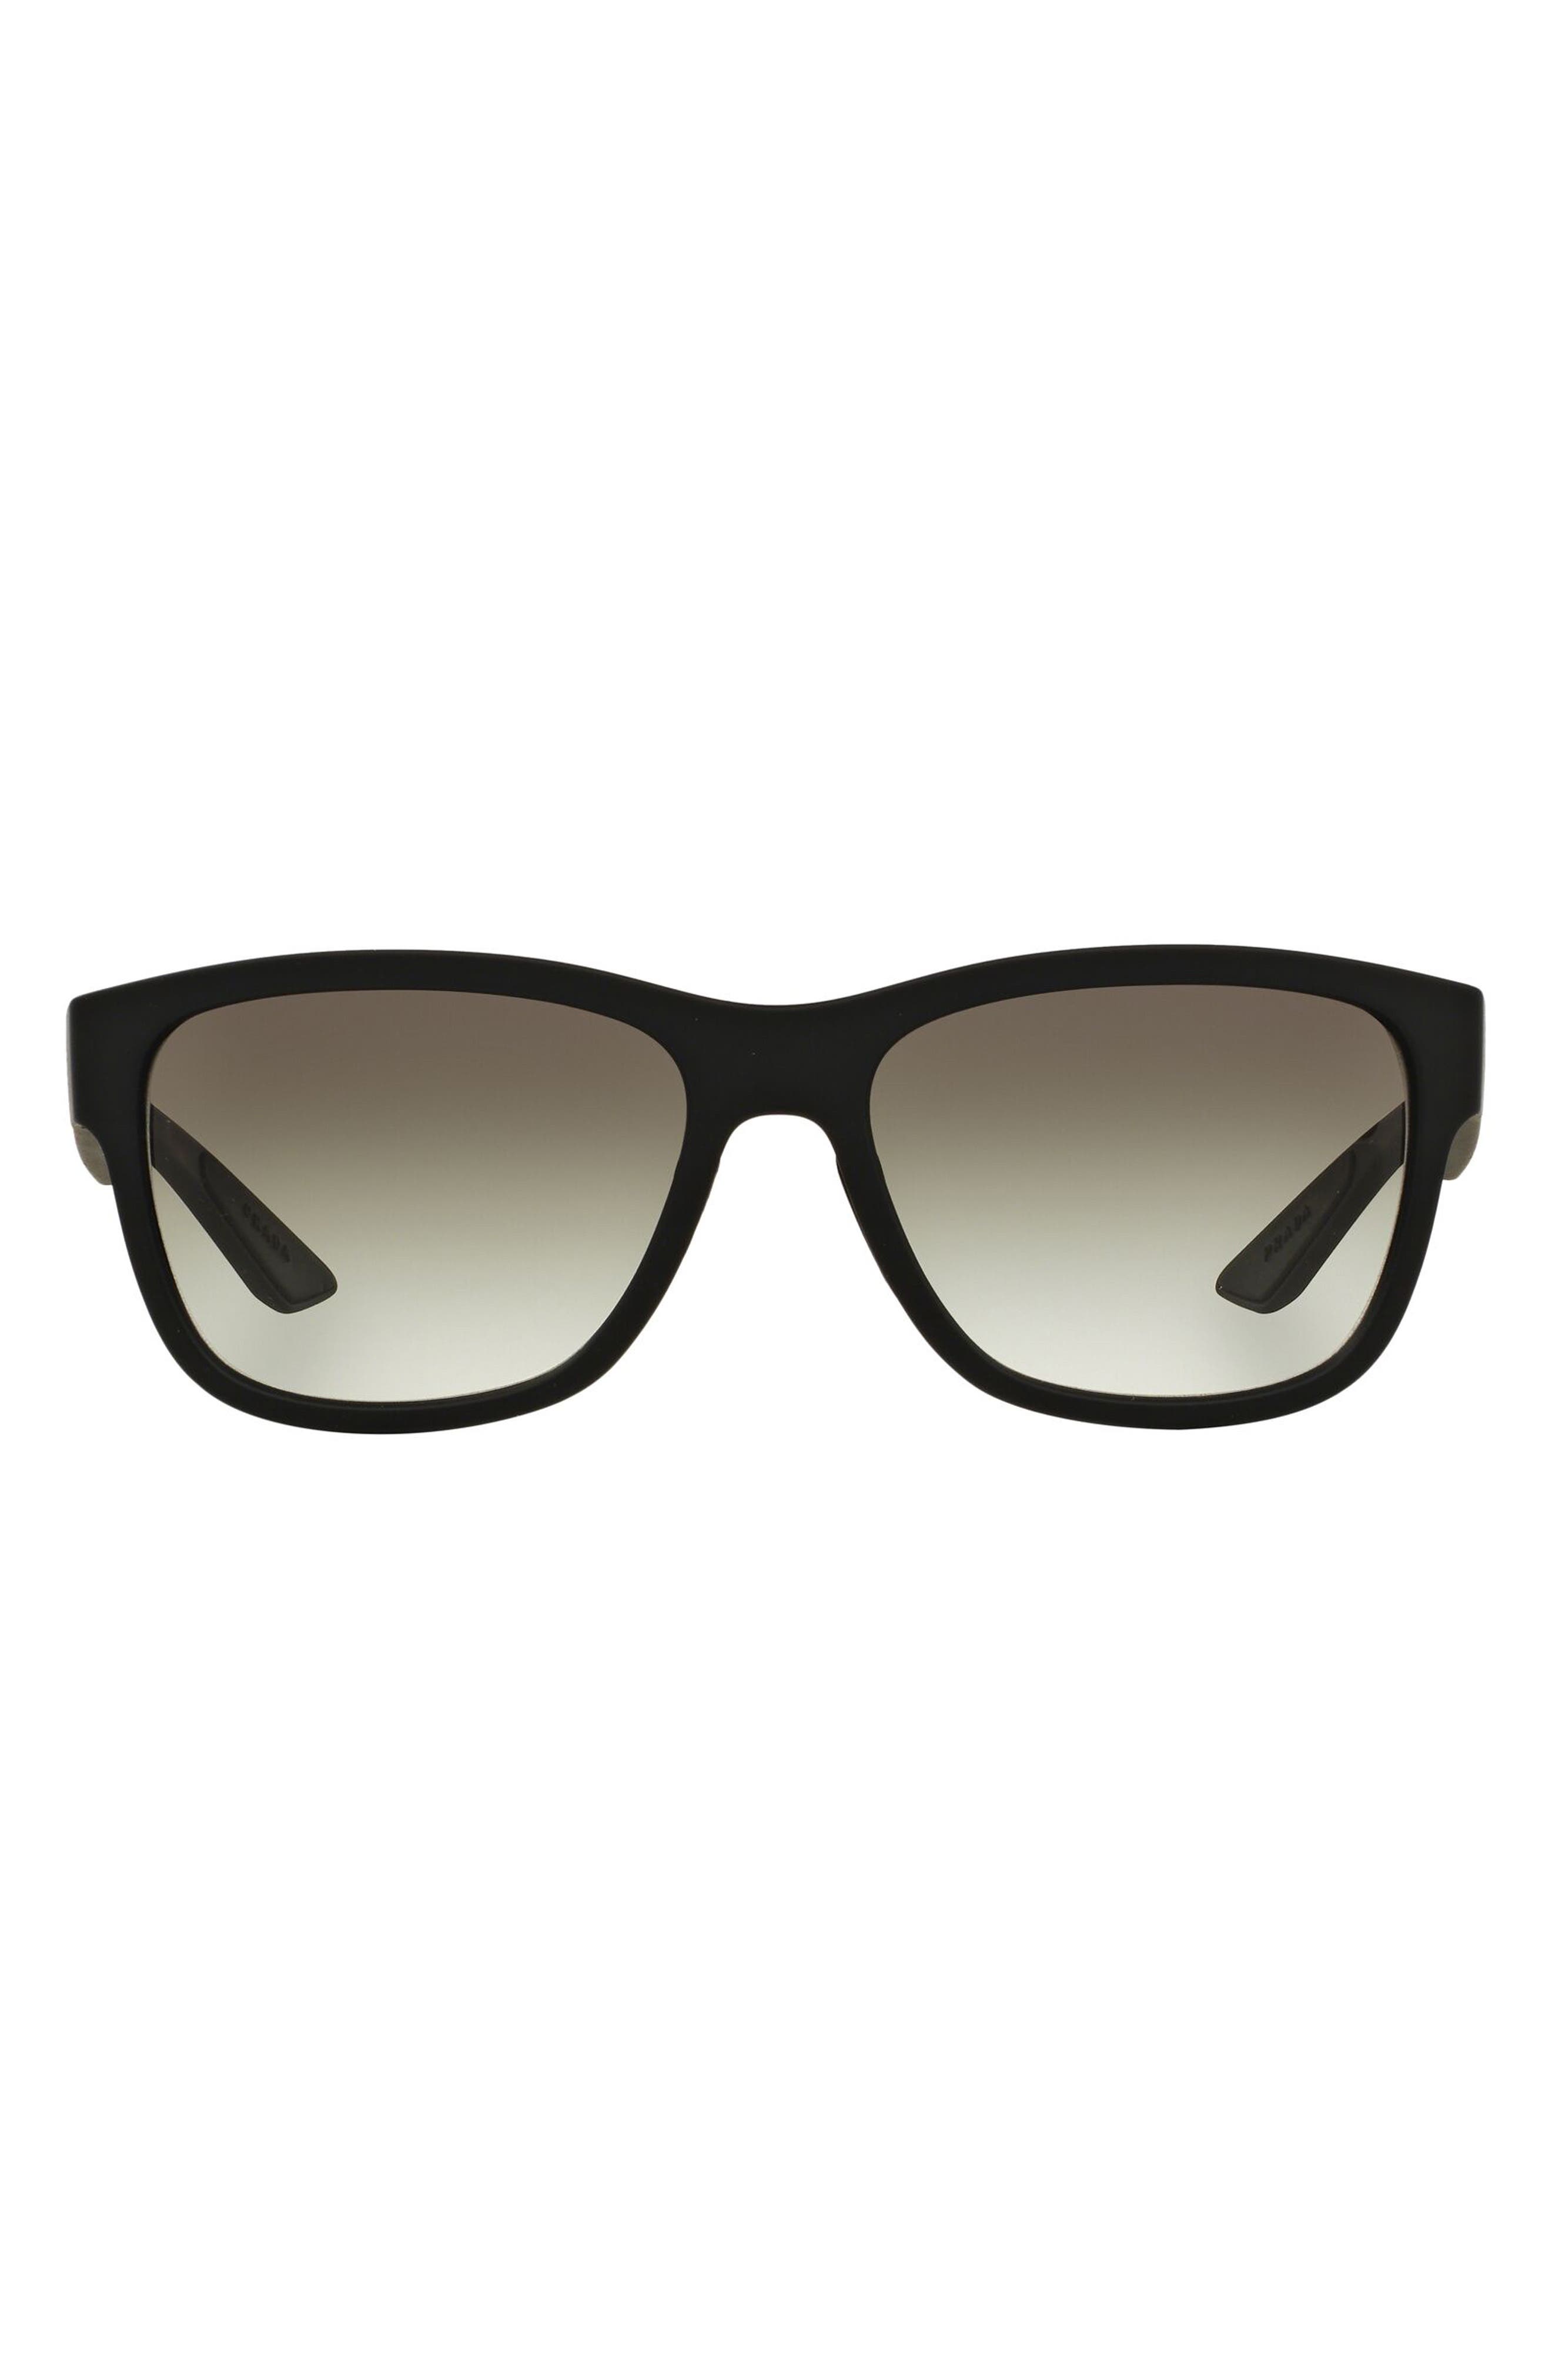 Prada 57mm Gradient Rectangle Sunglasses in Black Rubber/Grey Gradient at Nordstrom